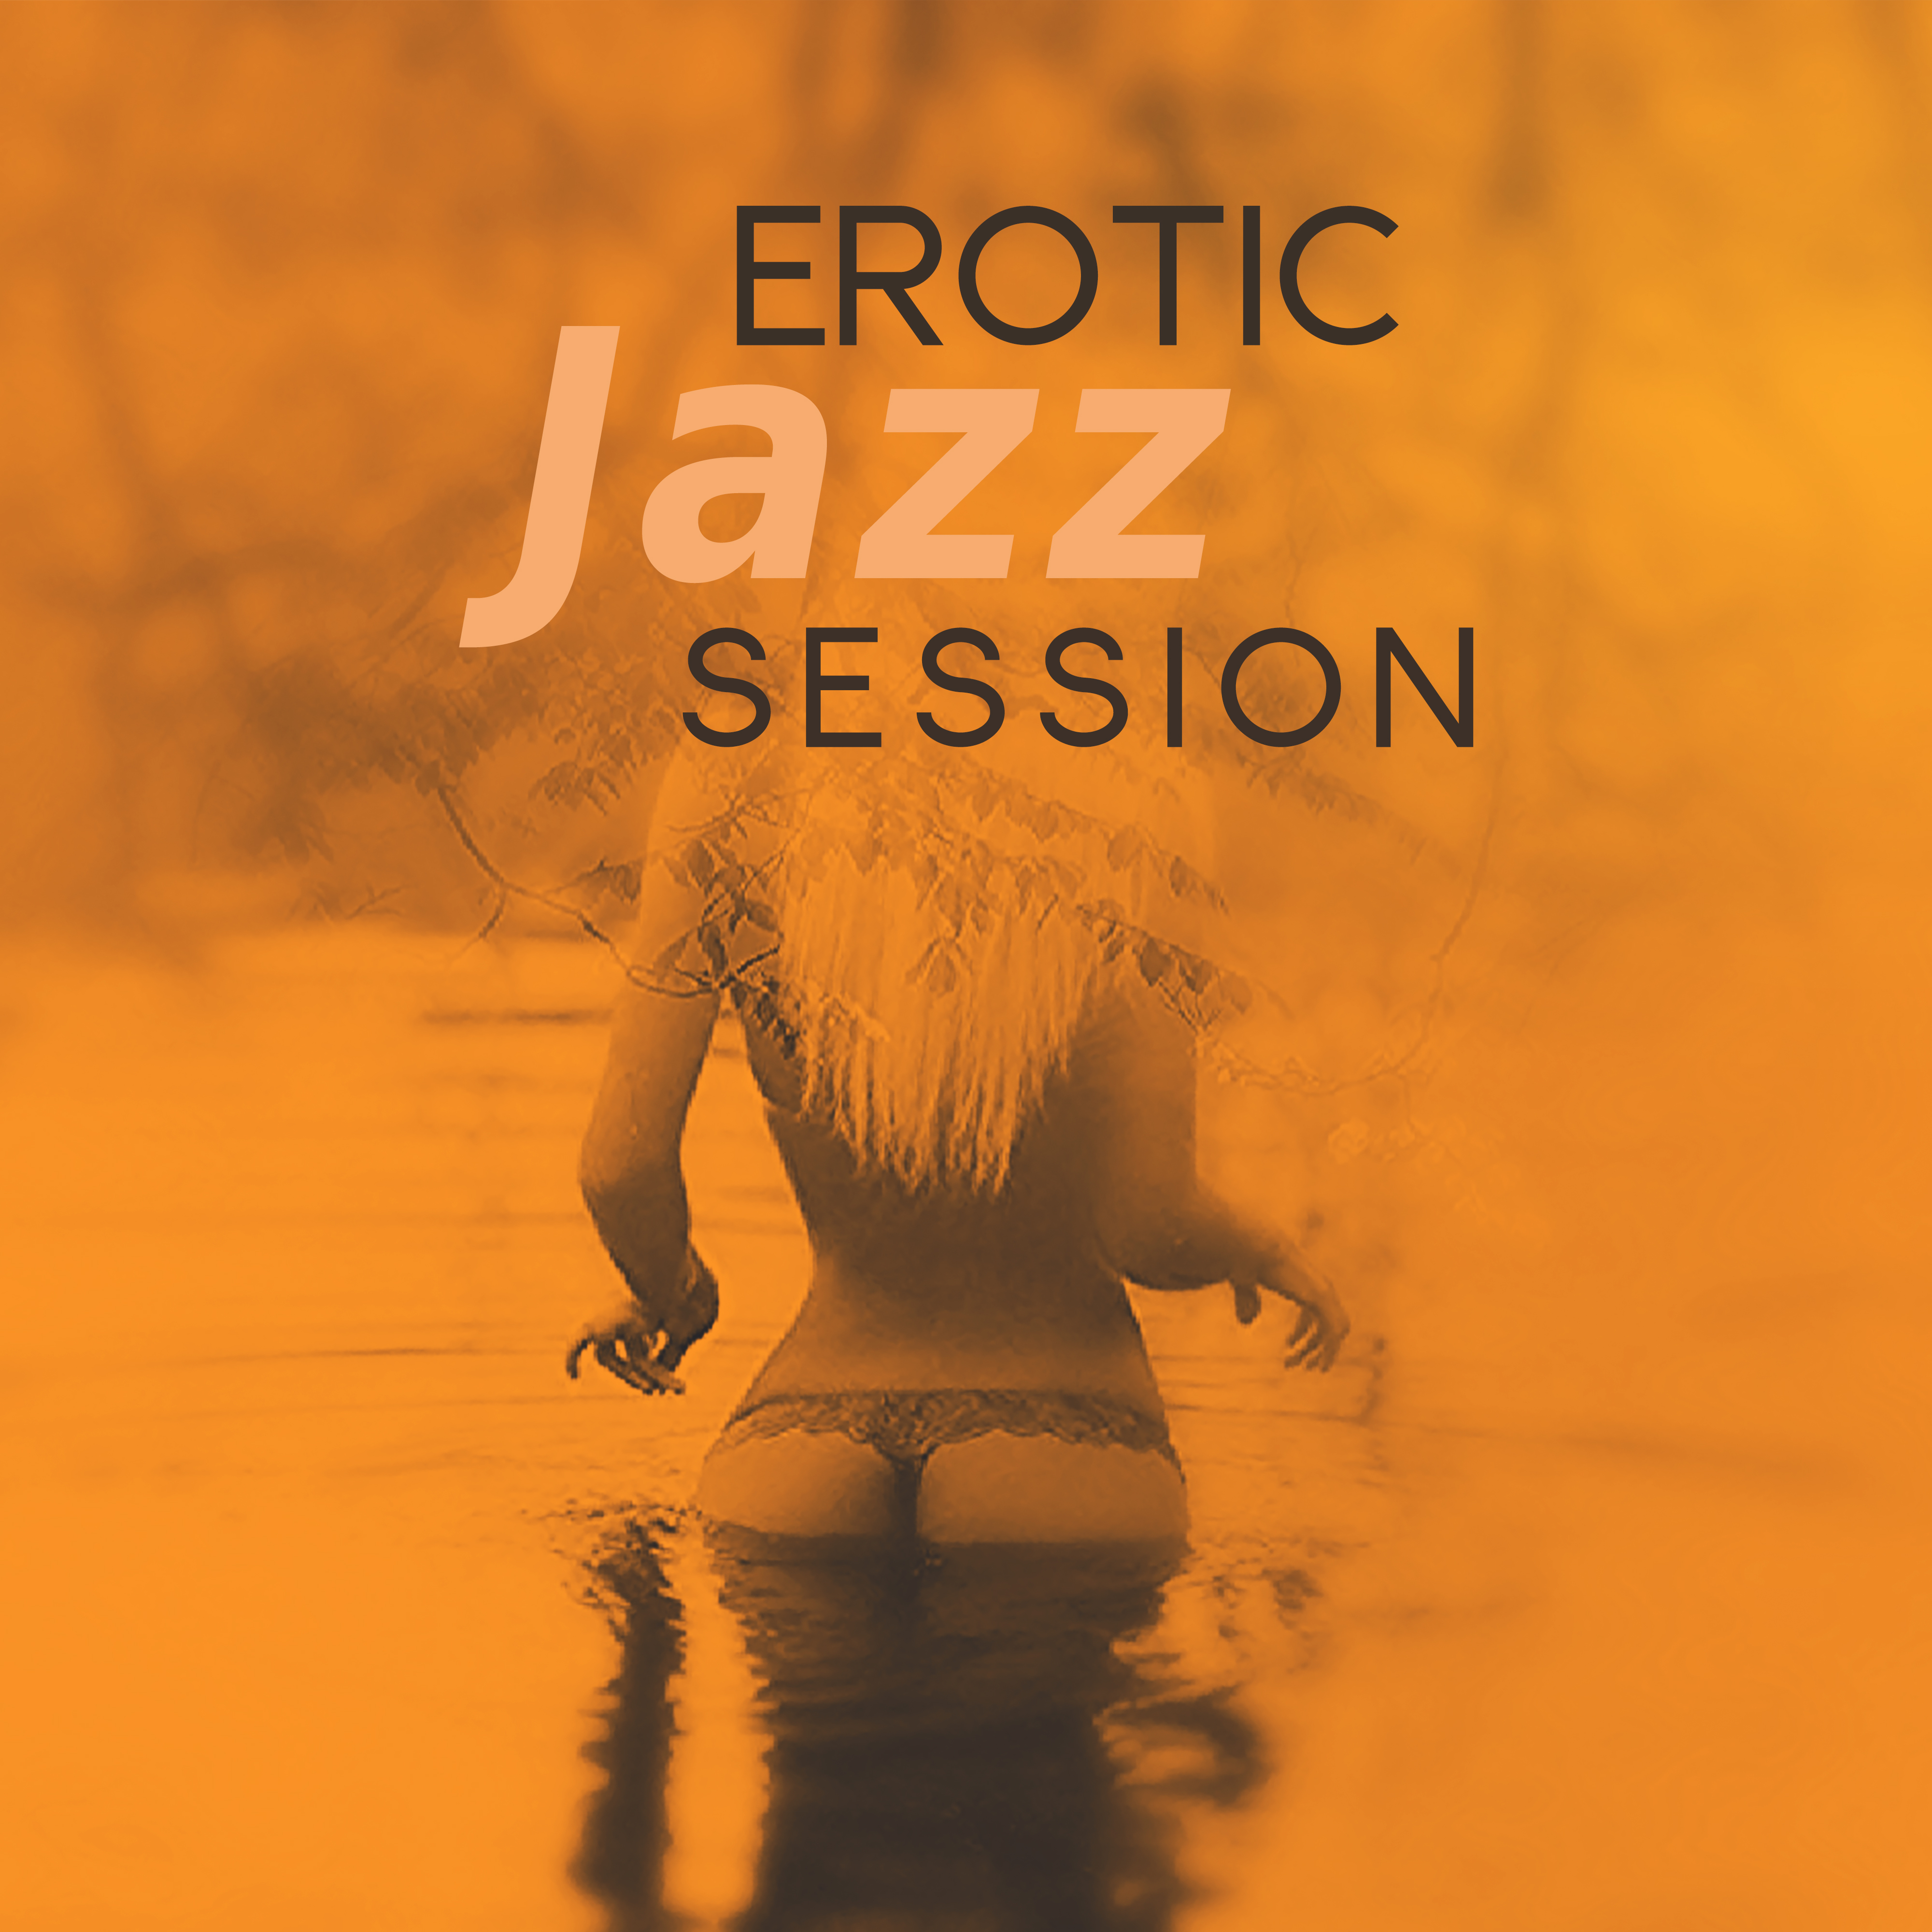 Erotic Jazz Session – Romantic Jazz Music, Smooth Sounds, Sensual Evening, Hot Massage